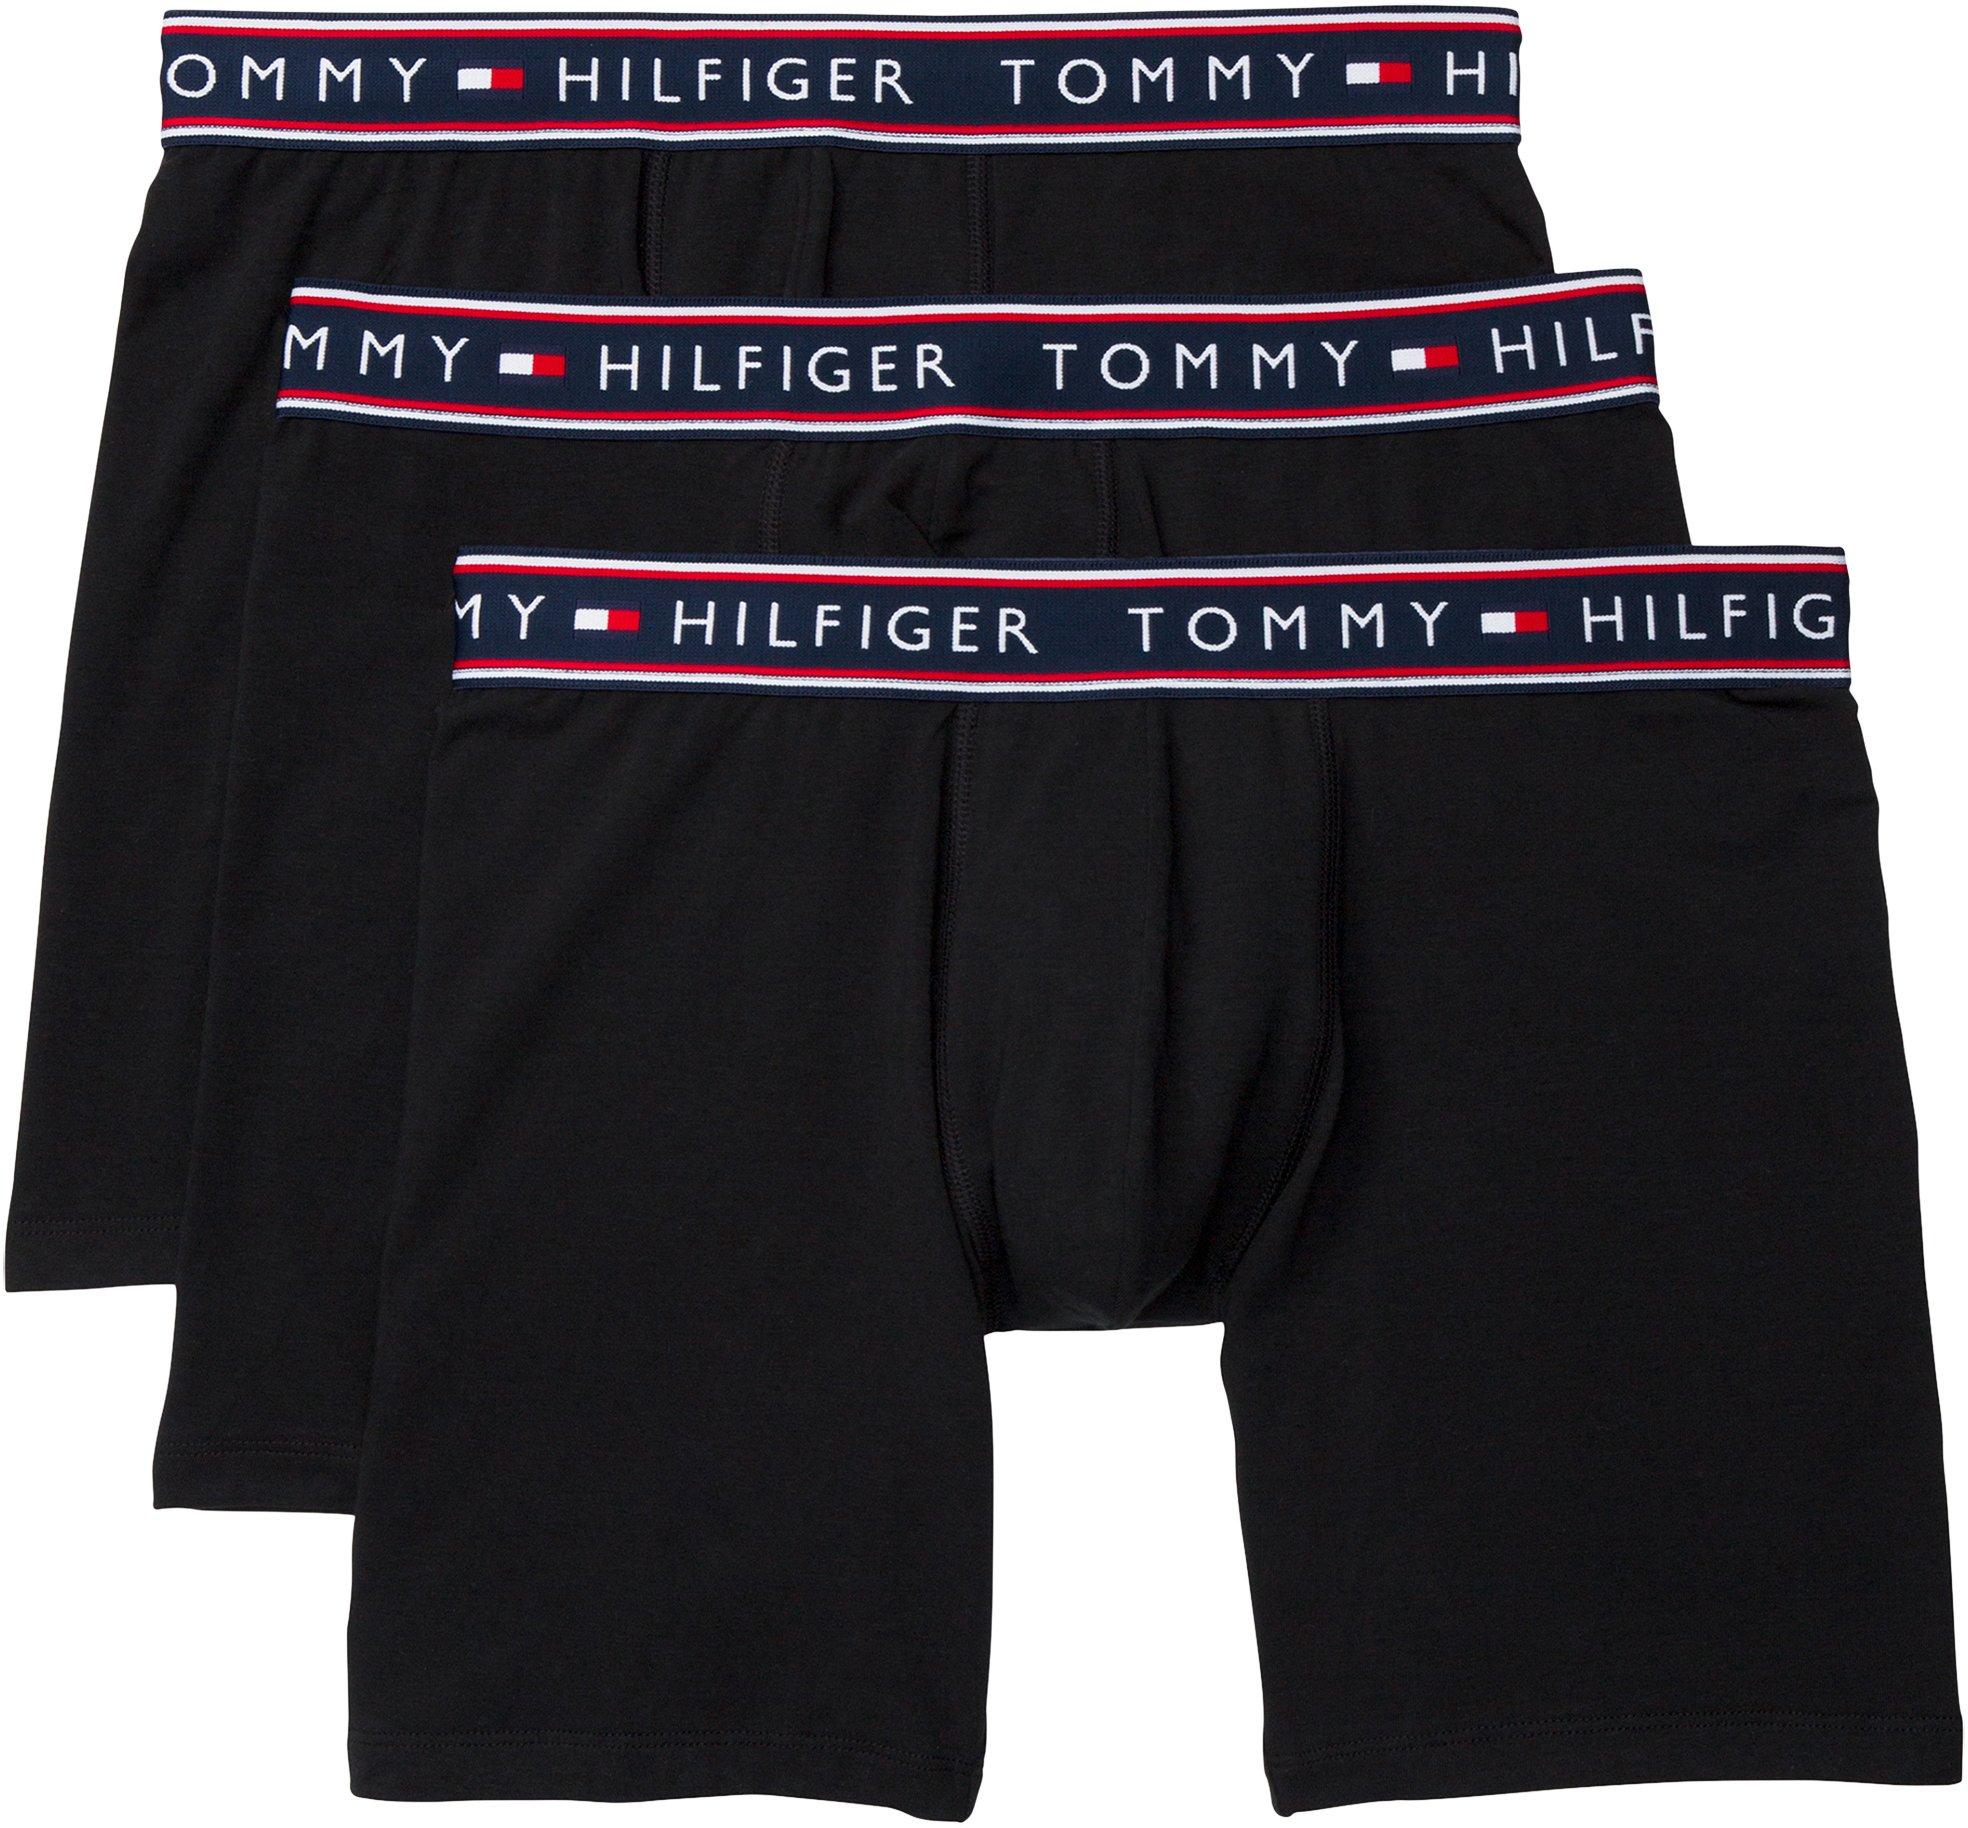 Tommy Hilfiger Mens Underwear 3 Pack Cotton Classics Knit Boxers